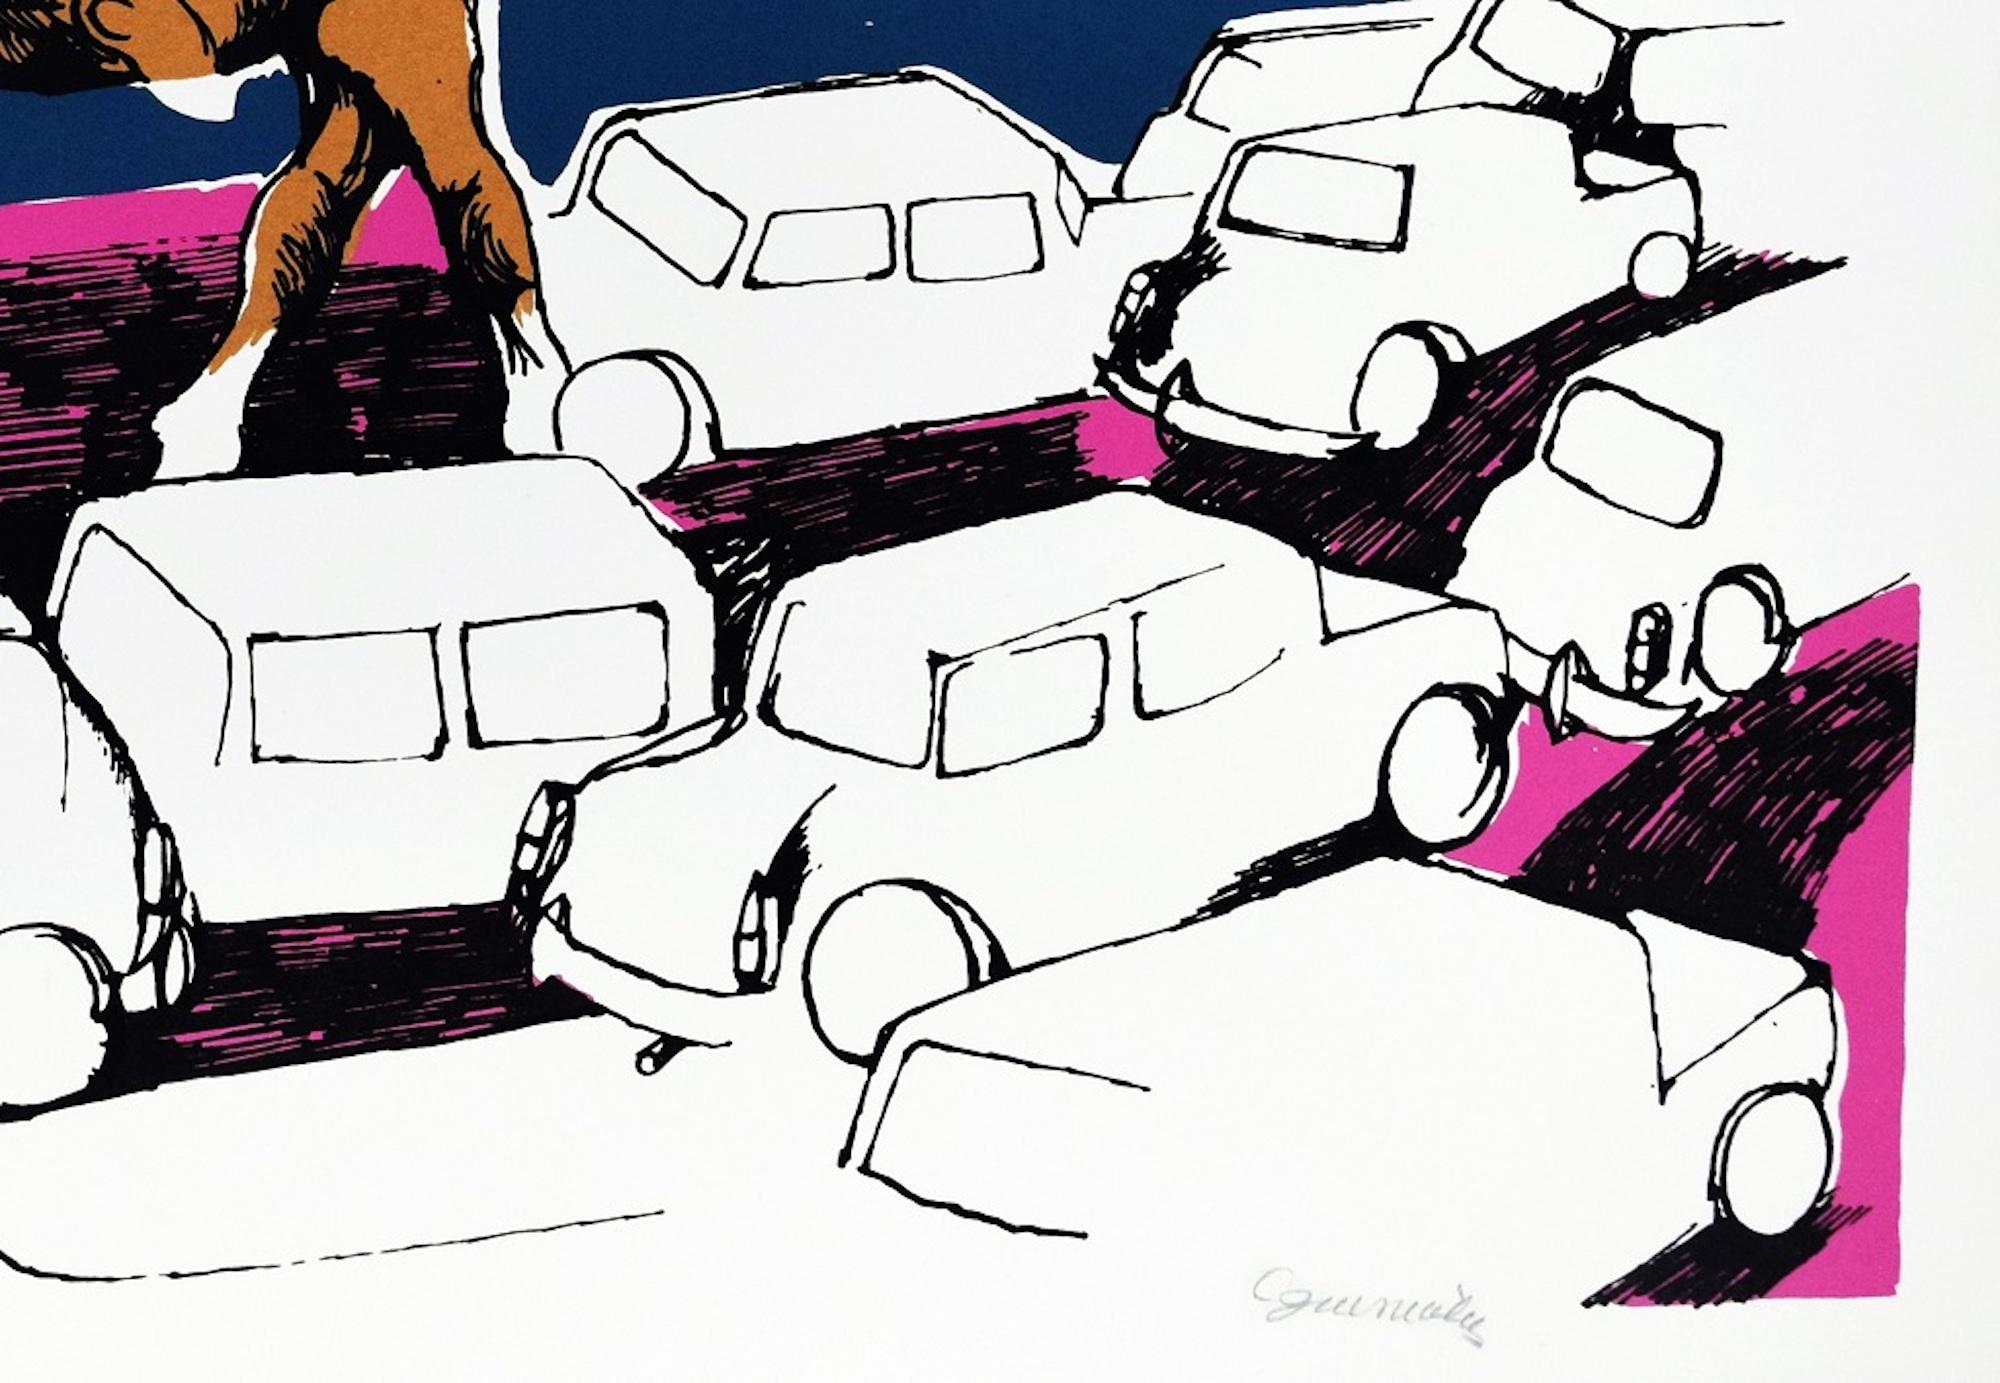 In The Traffic - Original Lithograph by L. Guerricchio - 1972 - Contemporary Print by Luigi Guerricchio